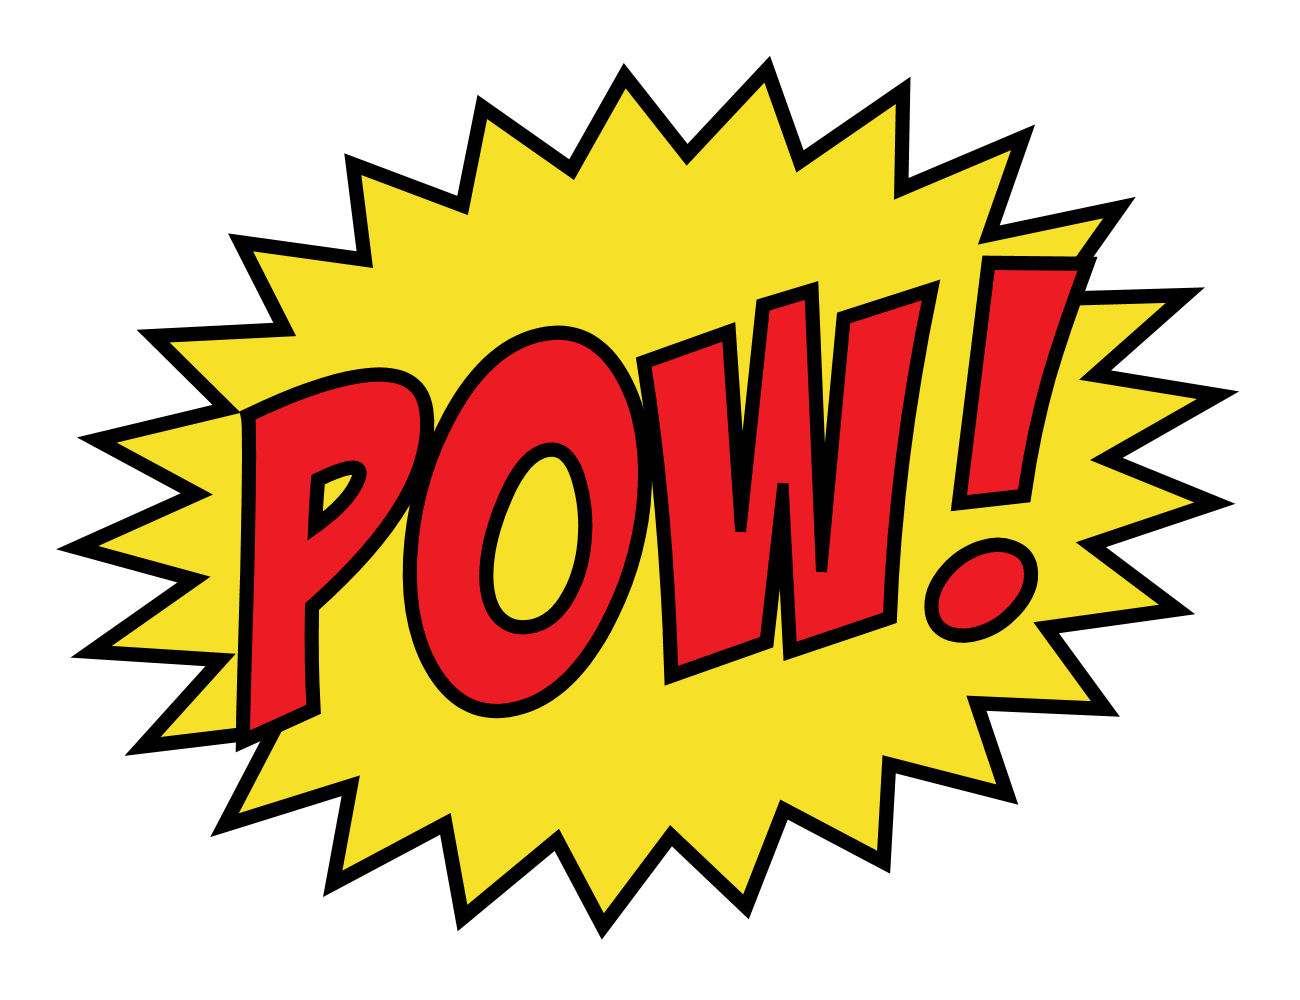 Pow Super Hero Sign - ClipArt Best